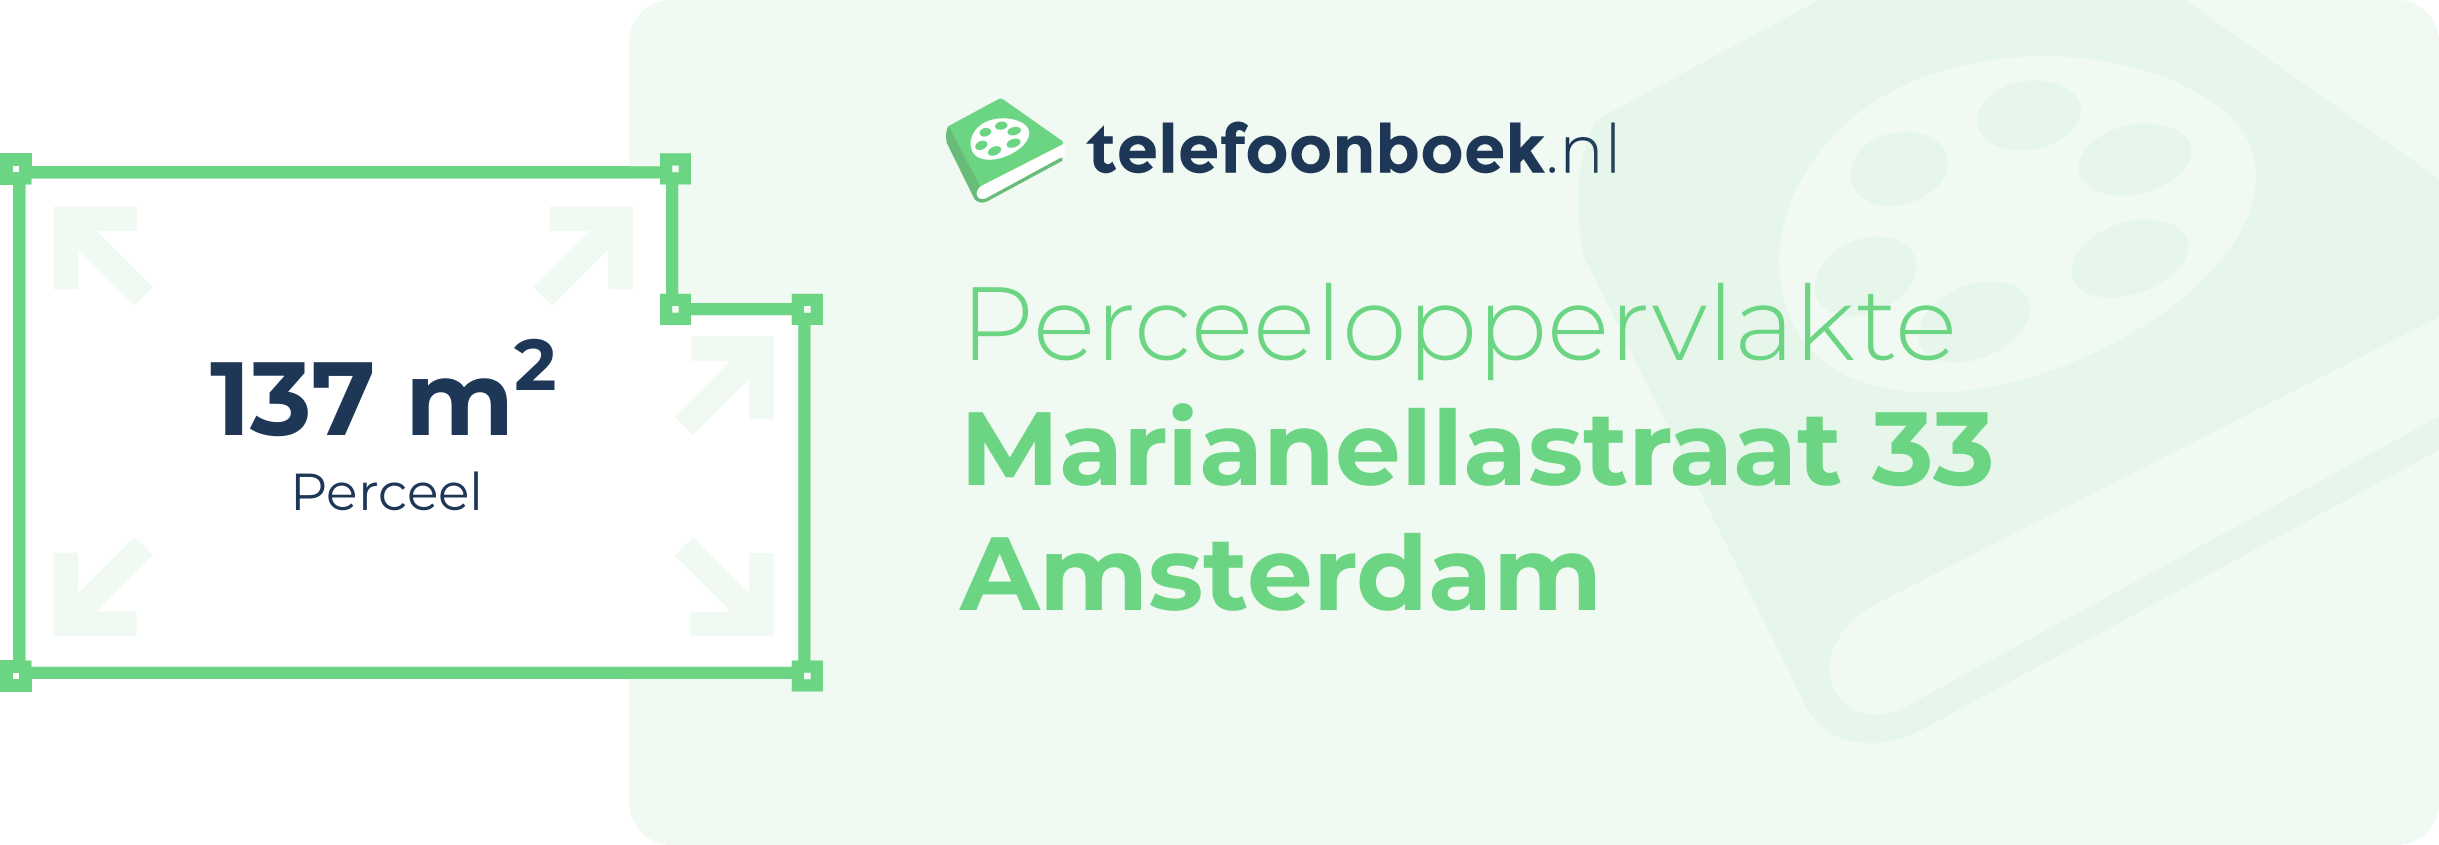 Perceeloppervlakte Marianellastraat 33 Amsterdam